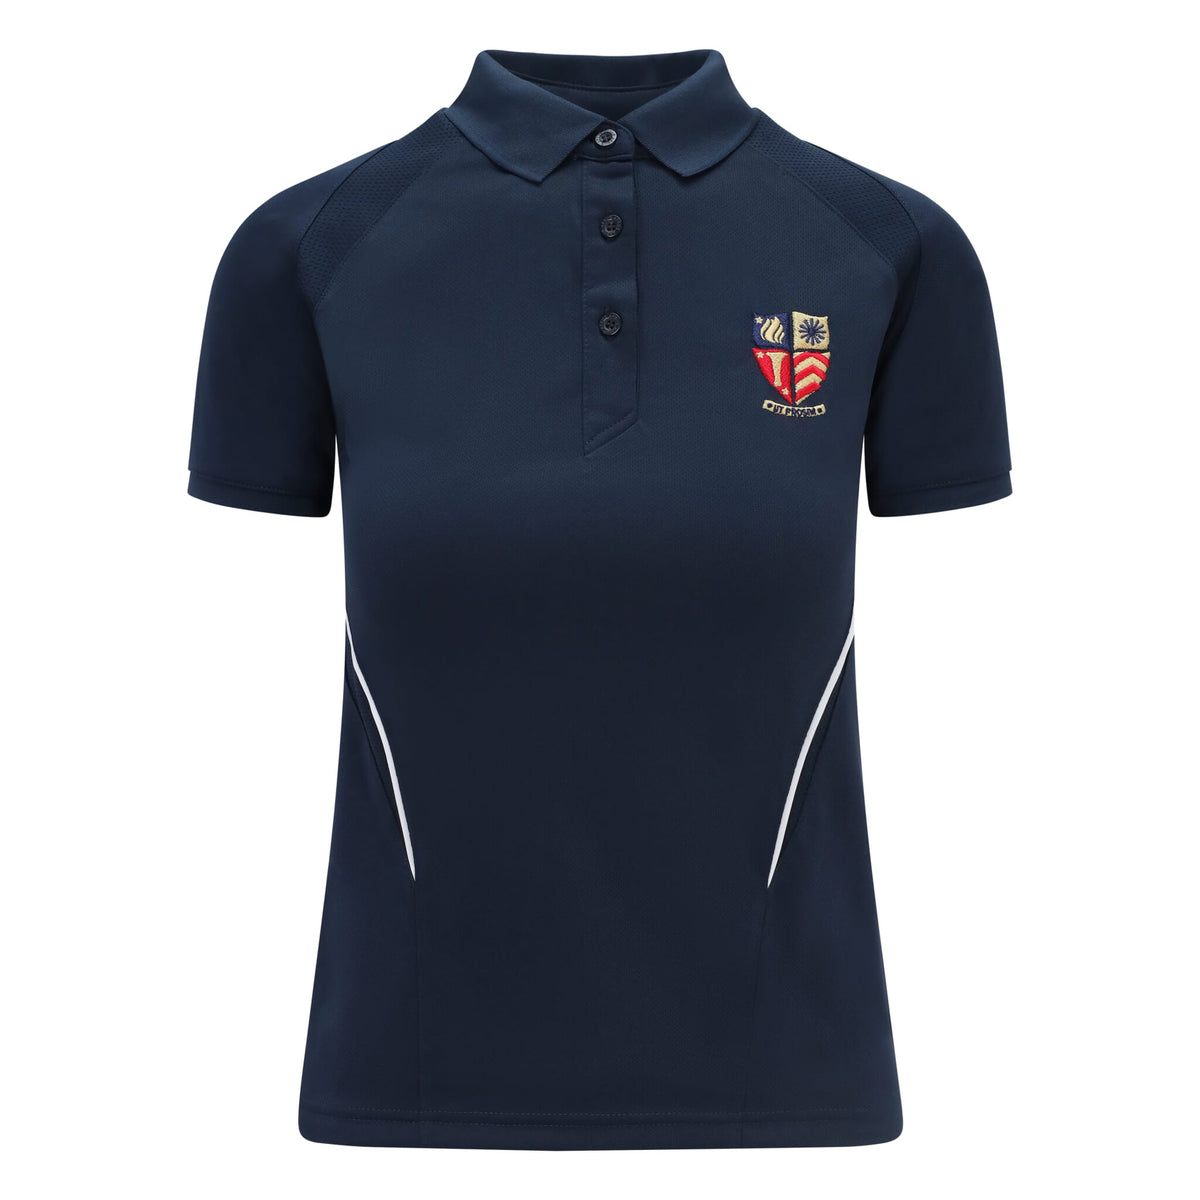 Ryde School Girls Multi-Purpose Navy Games Shirt